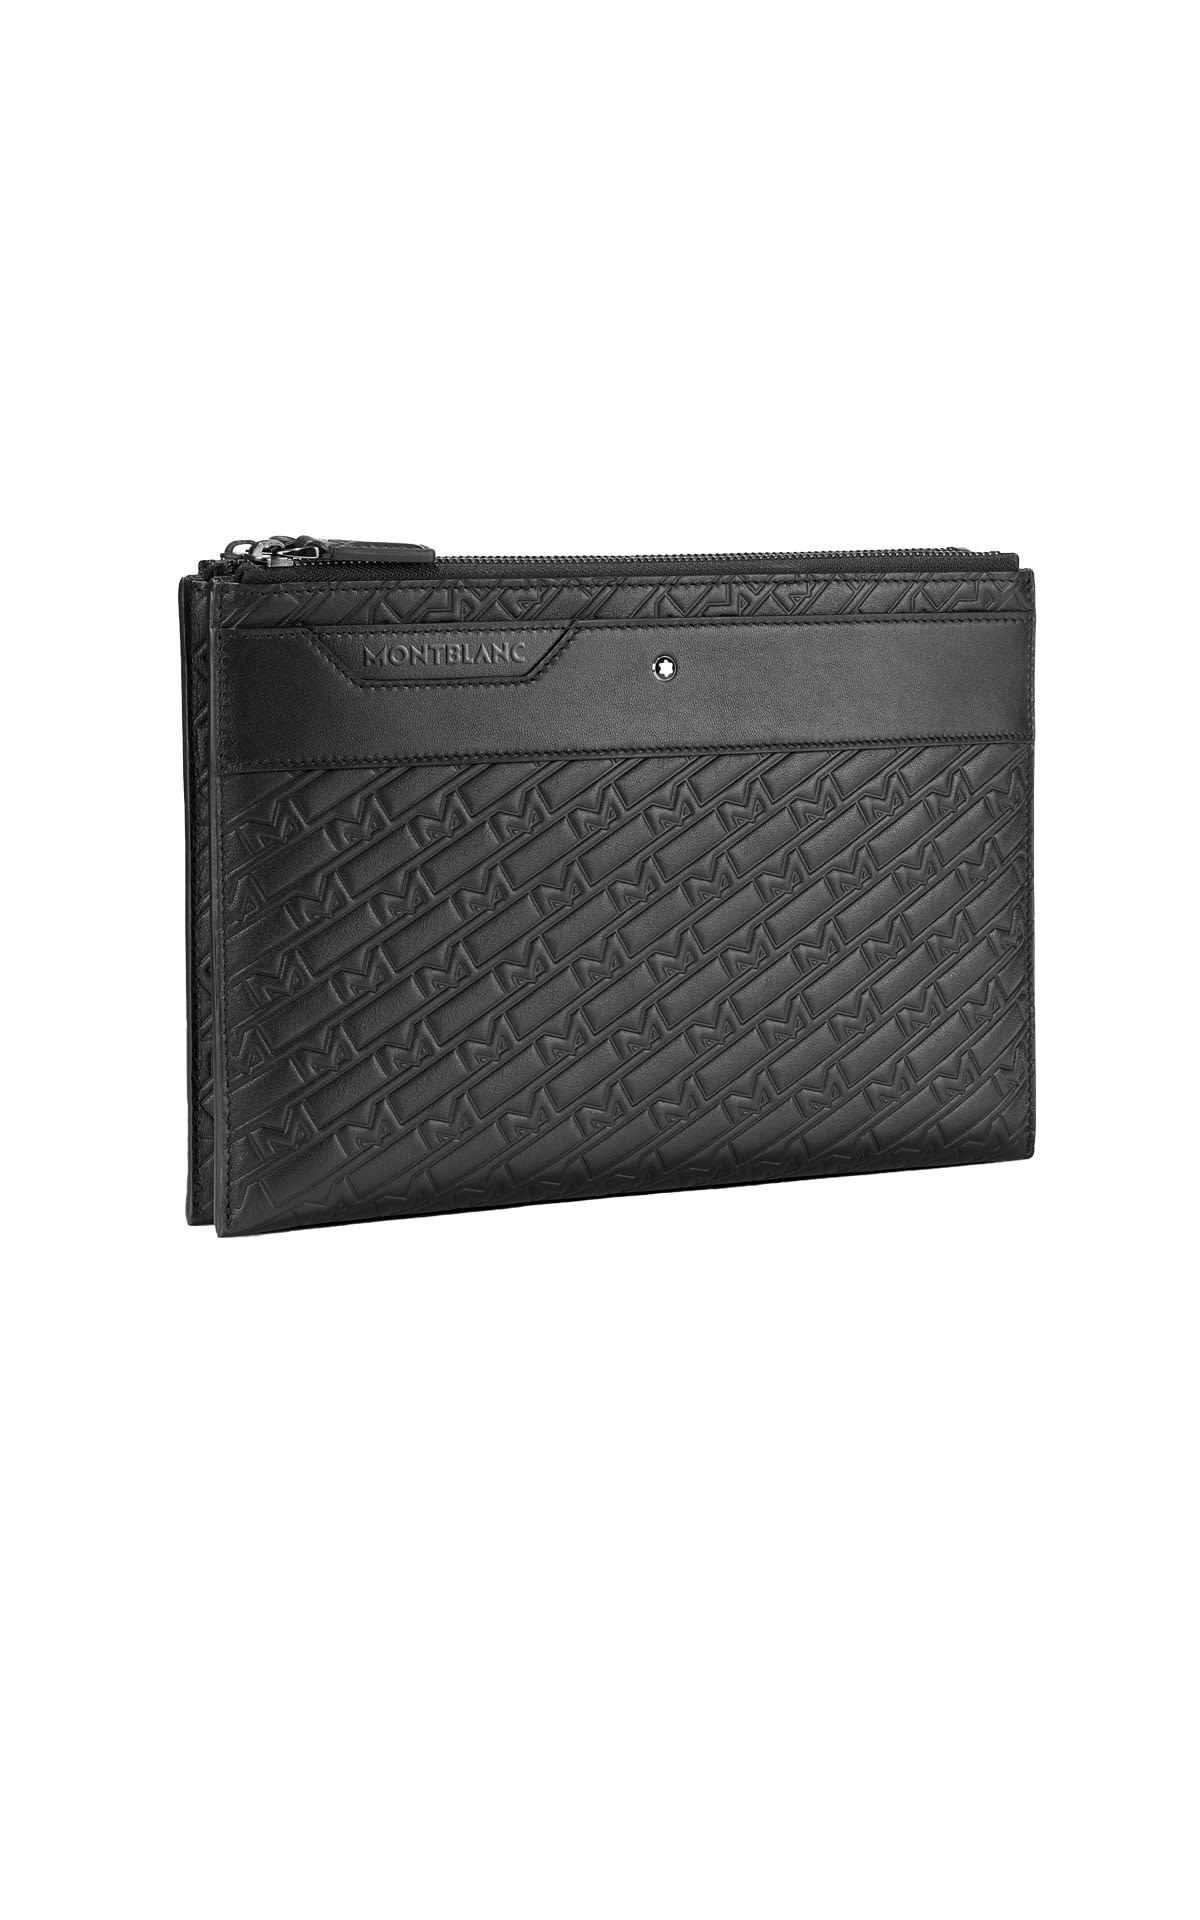 Black leather wallet Montblanc